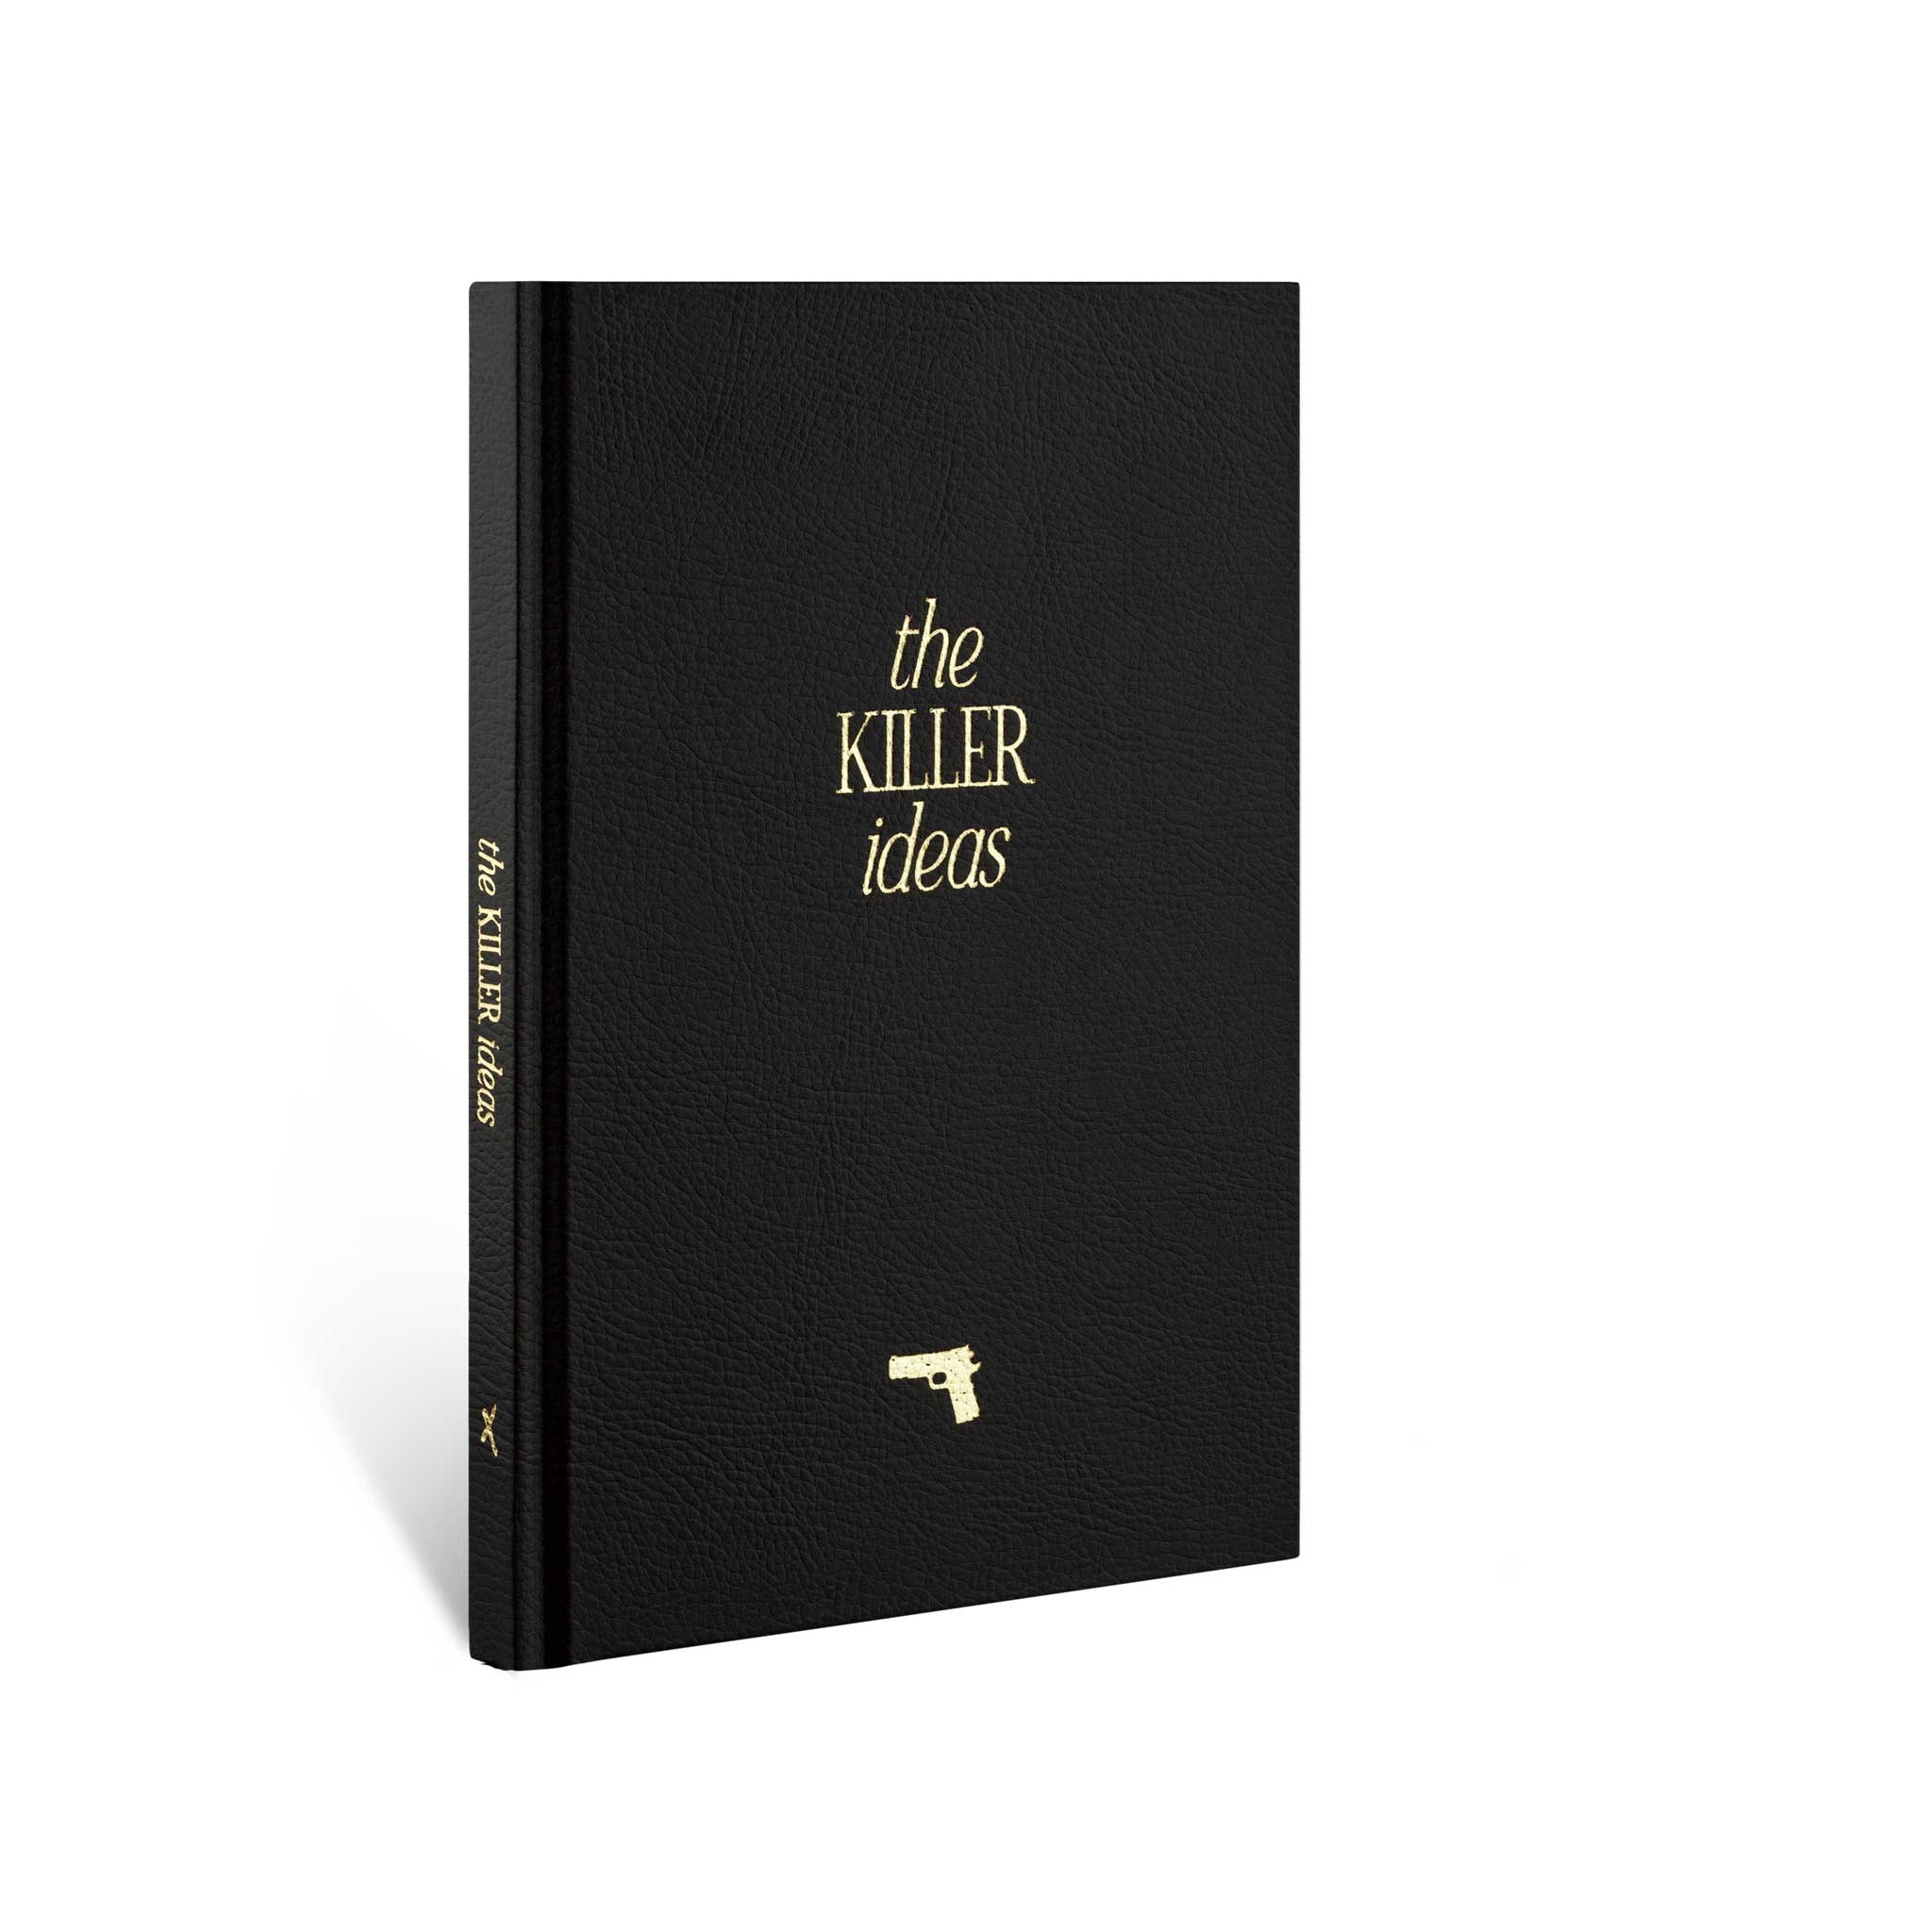 Notizbuch / Bullet Journal "Killer Ideas" | Schwarz